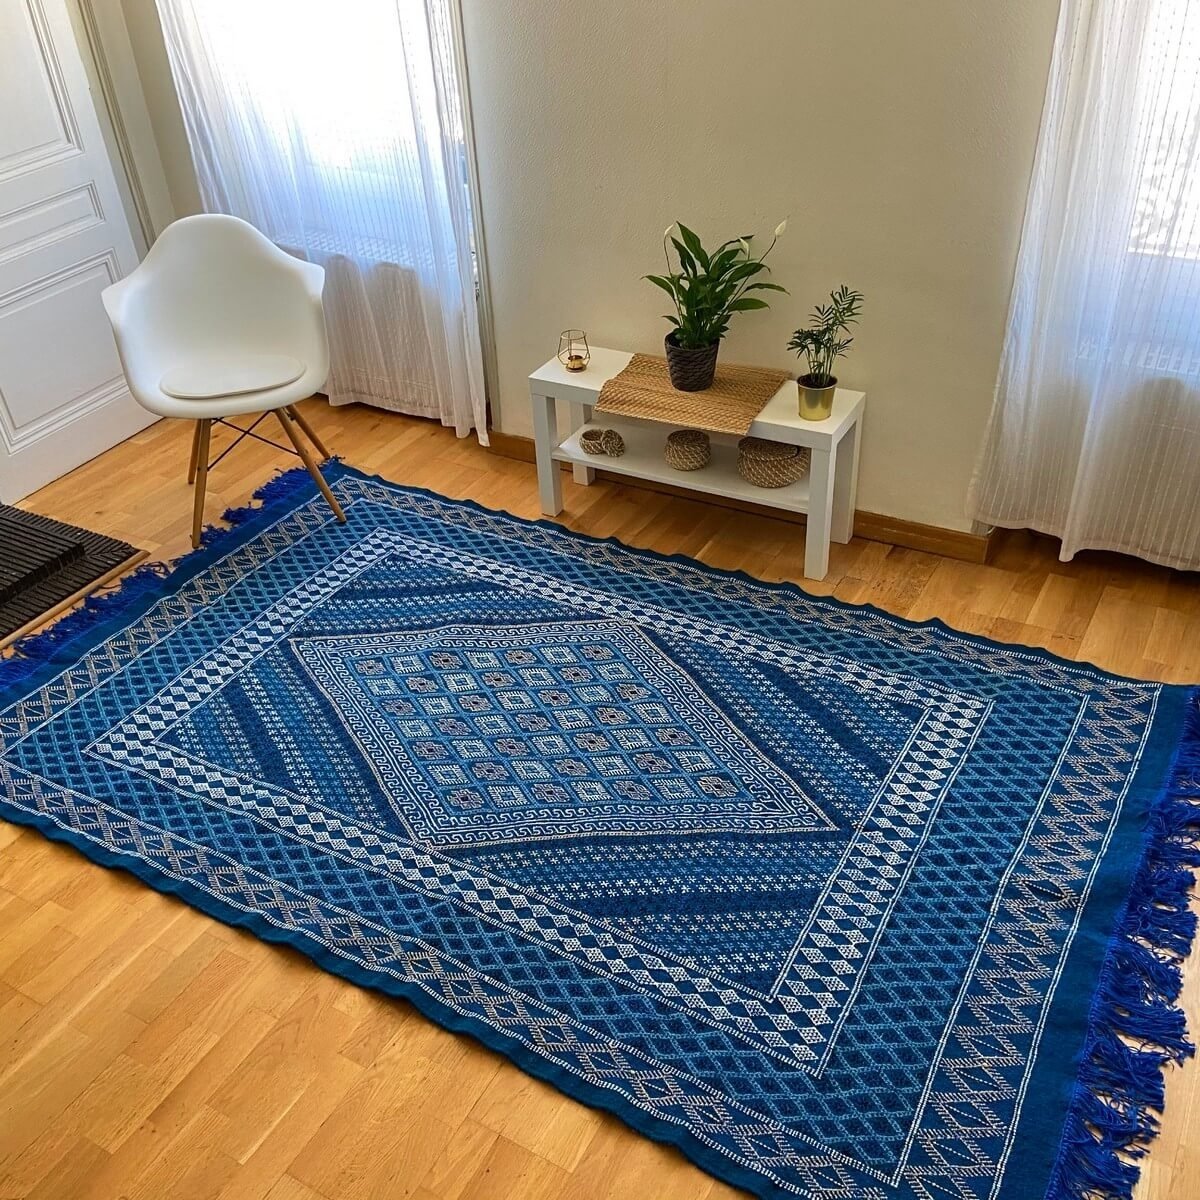 Berber carpet Rug Margoum Nidhal 120x180 Blue/White (Handmade, Wool, Tunisia) Tunisian margoum rug from the city of Kairouan. Re